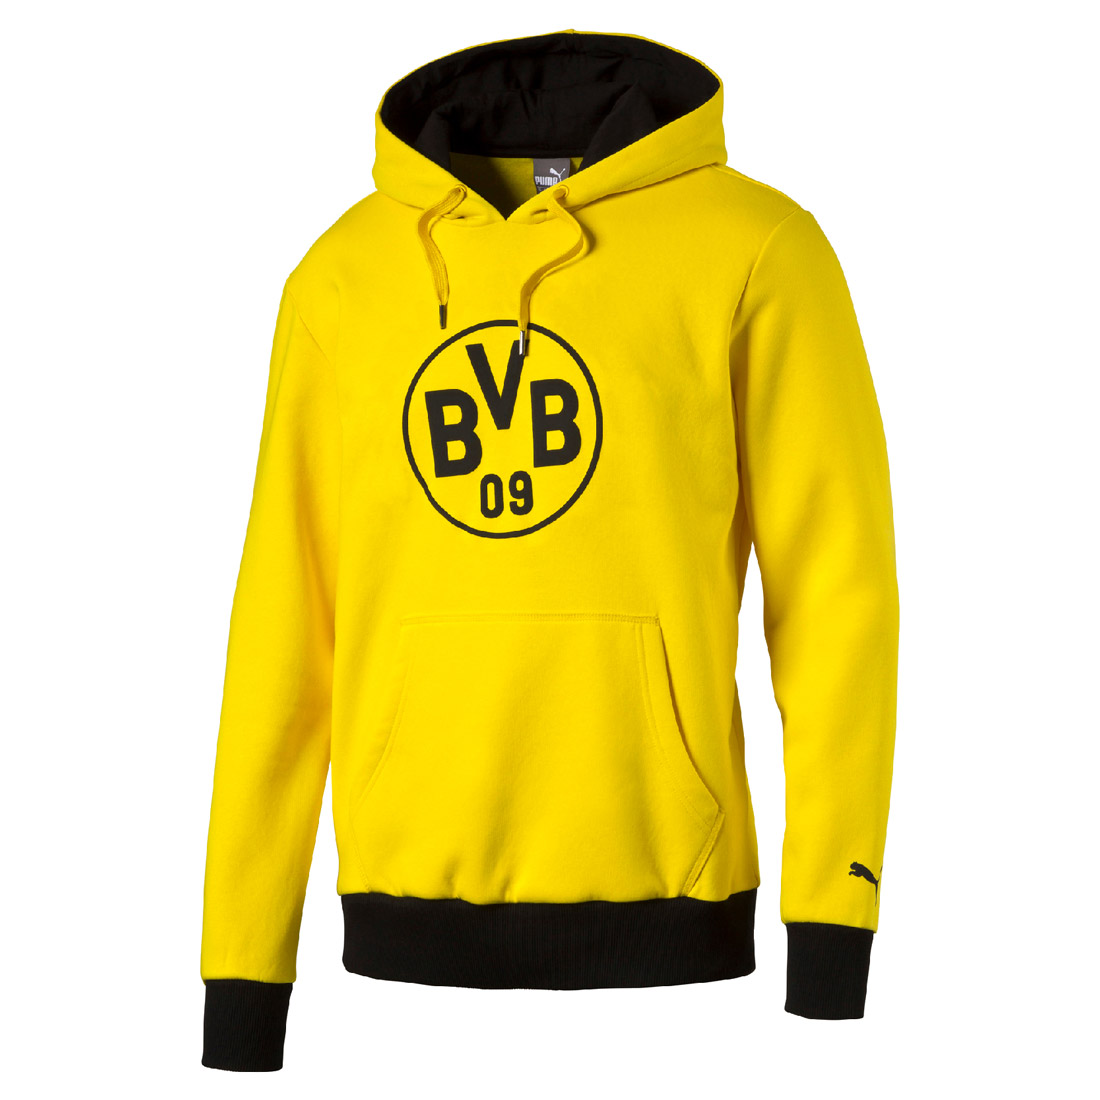 Puma BVB Badge Hoody Herren Sweatshirt Dortmund 09 gelb